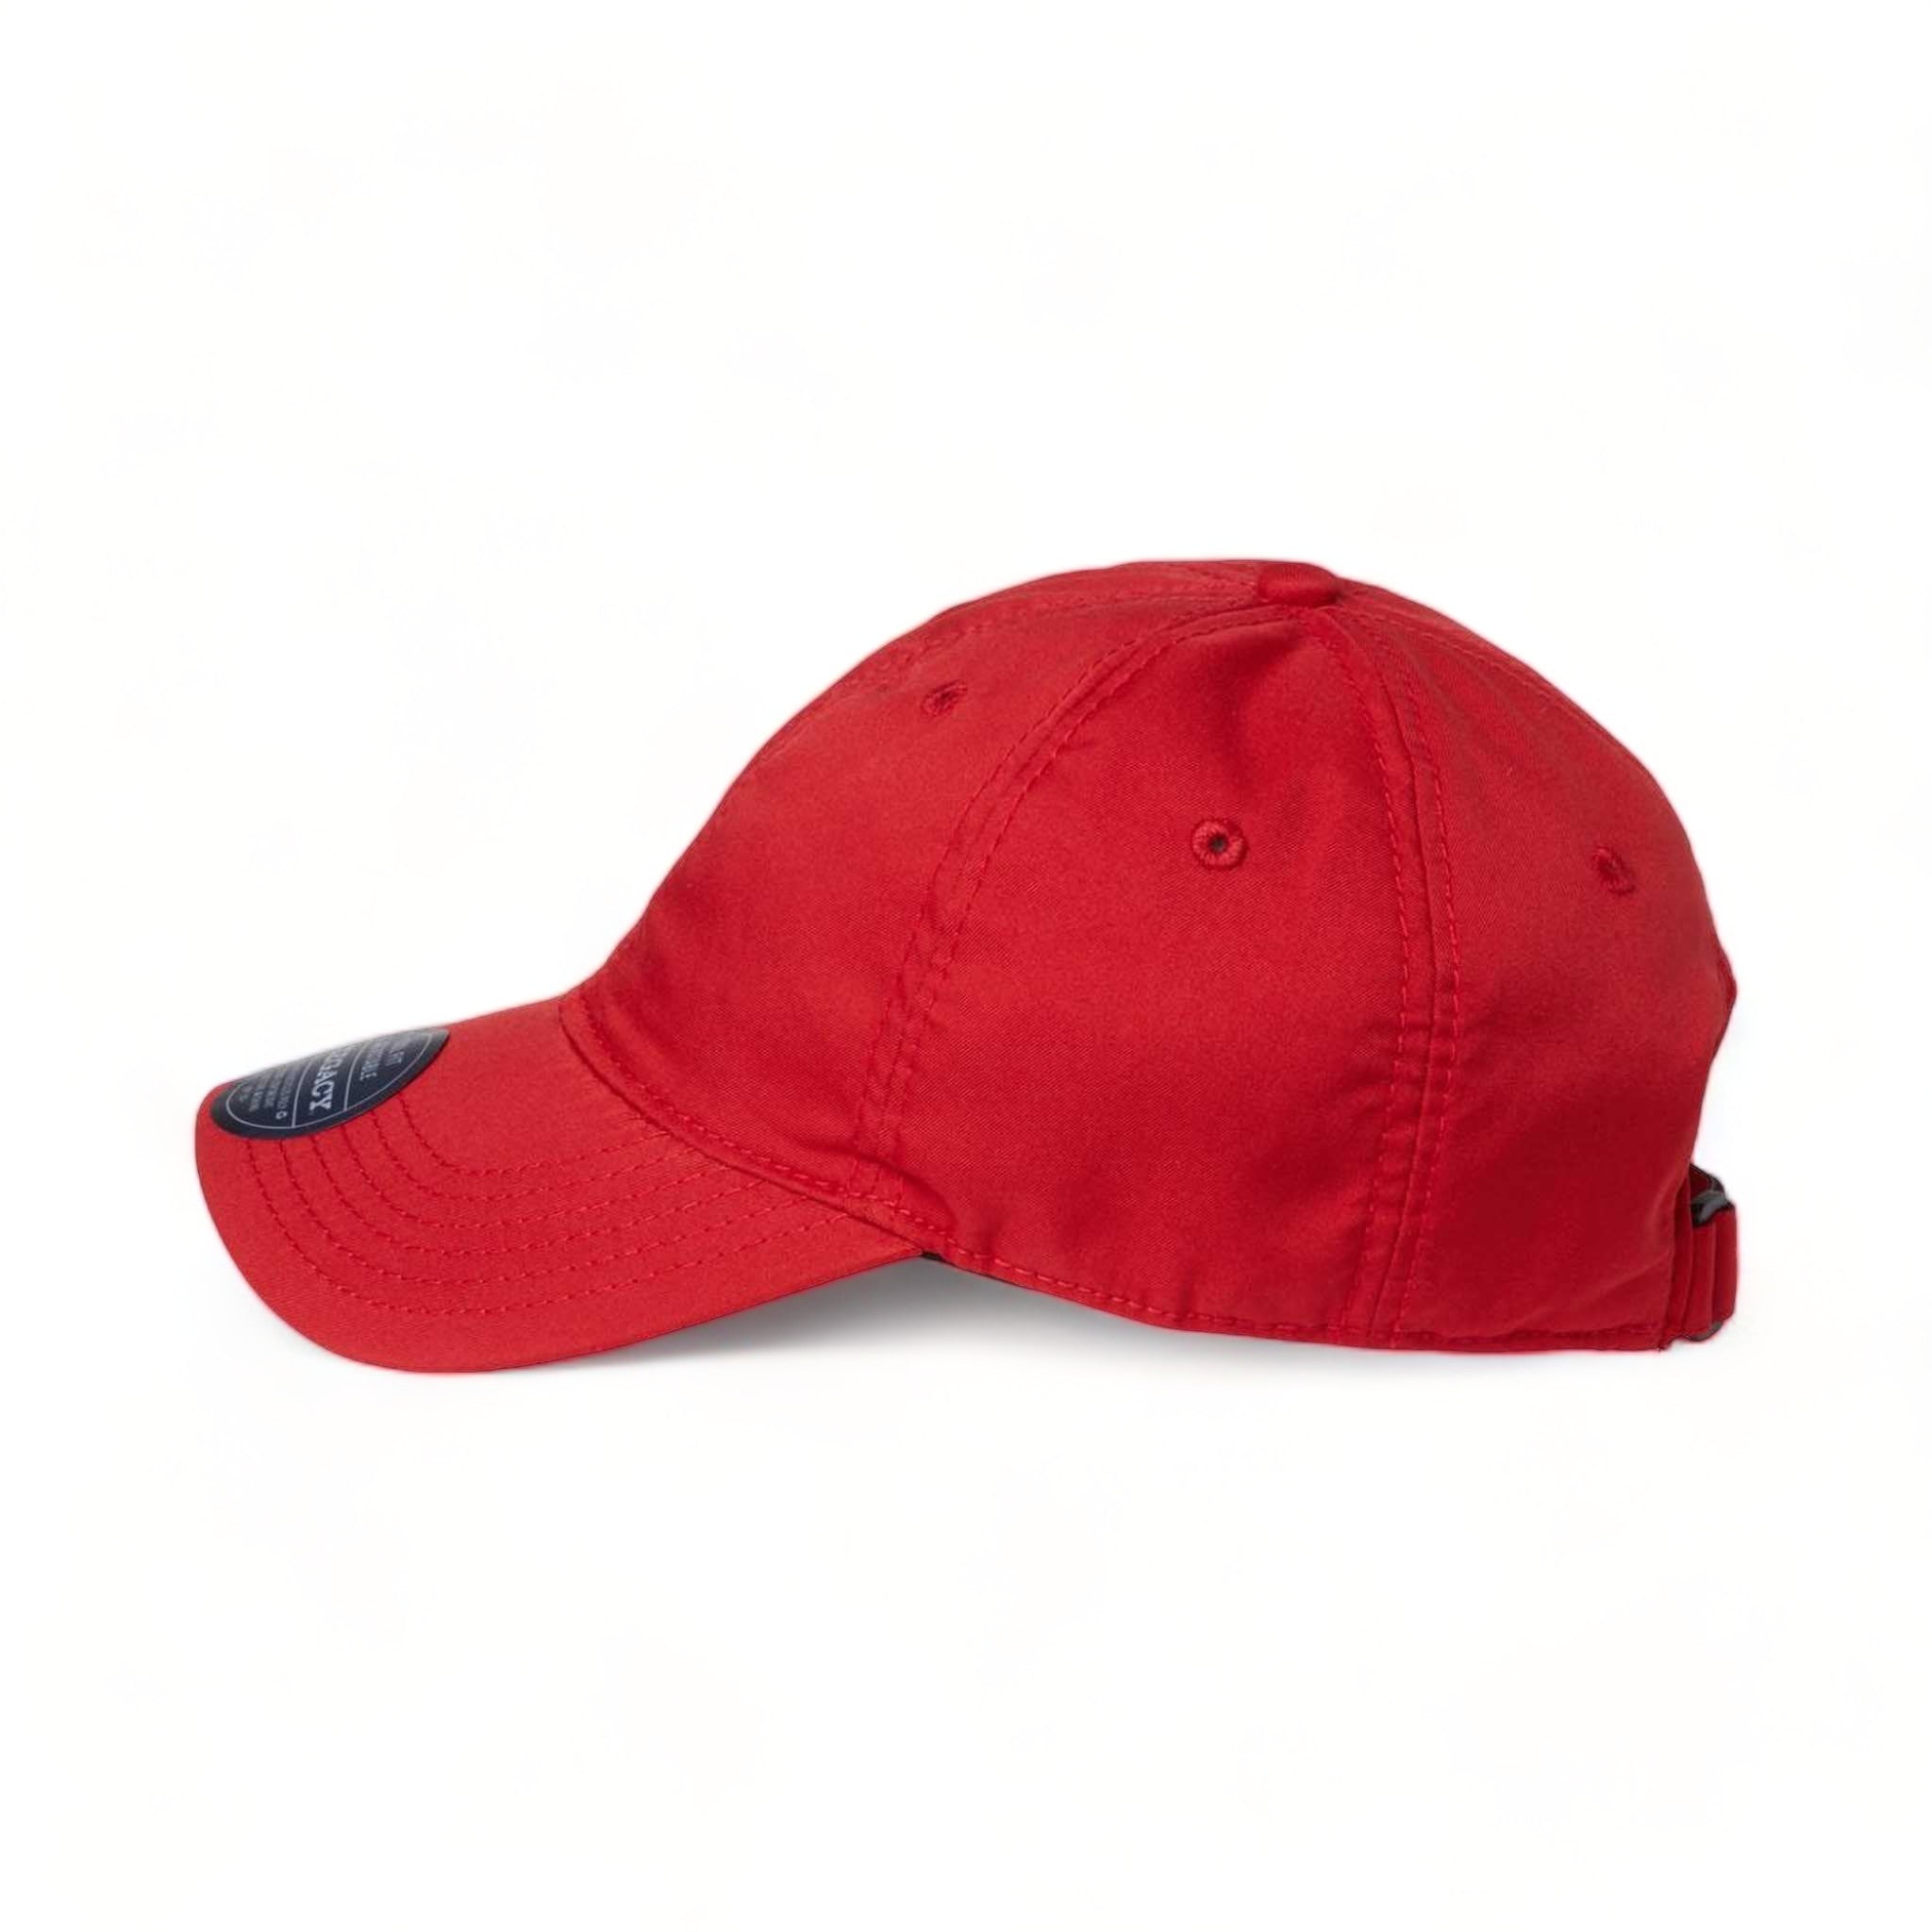 Side view of LEGACY CFA custom hat in scarlet